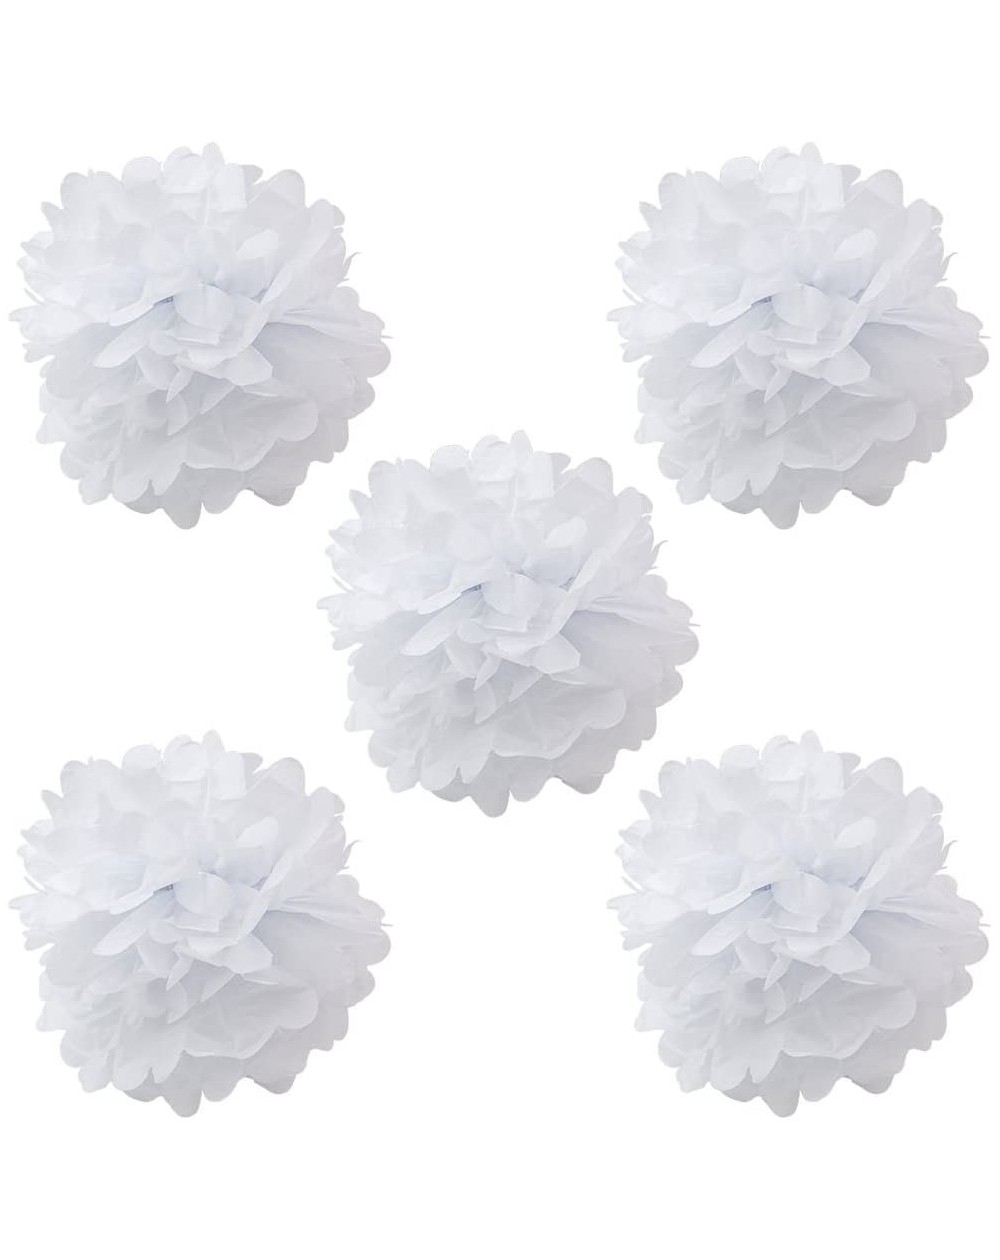 Tissue Pom Poms Set of 5 - White 8" - (5 Pack) Tissue Pom Poms Flower Party Decorations for Weddings- Birthday- Bridal- Baby ...